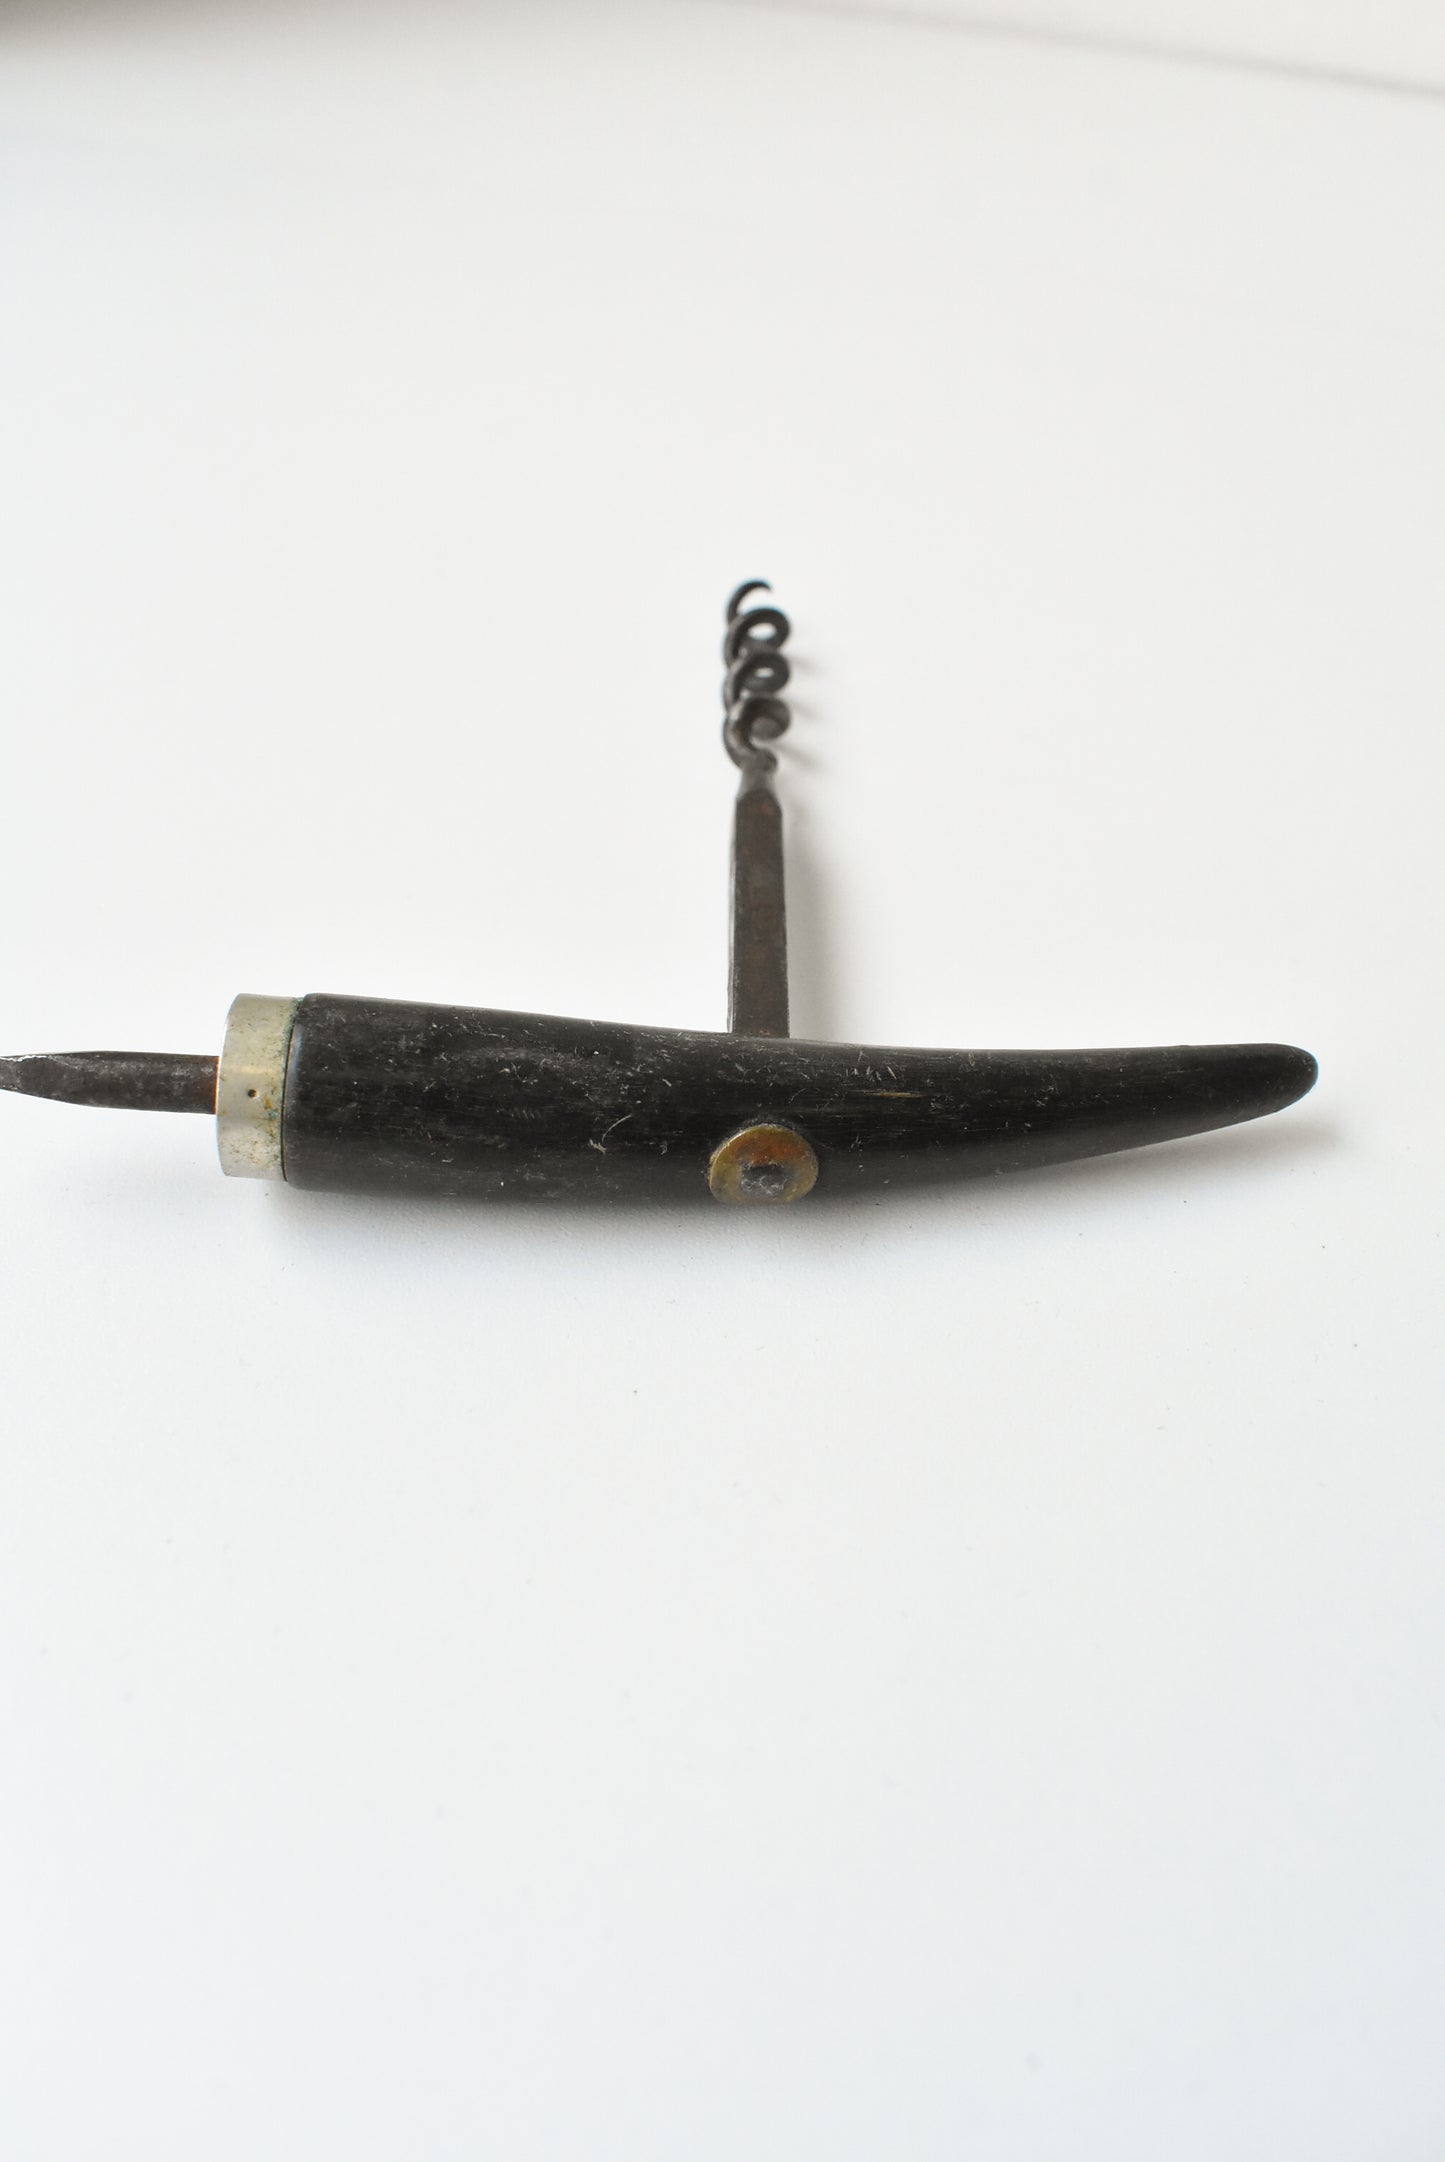 Vintage horn corkscrew and awl/screwdriver